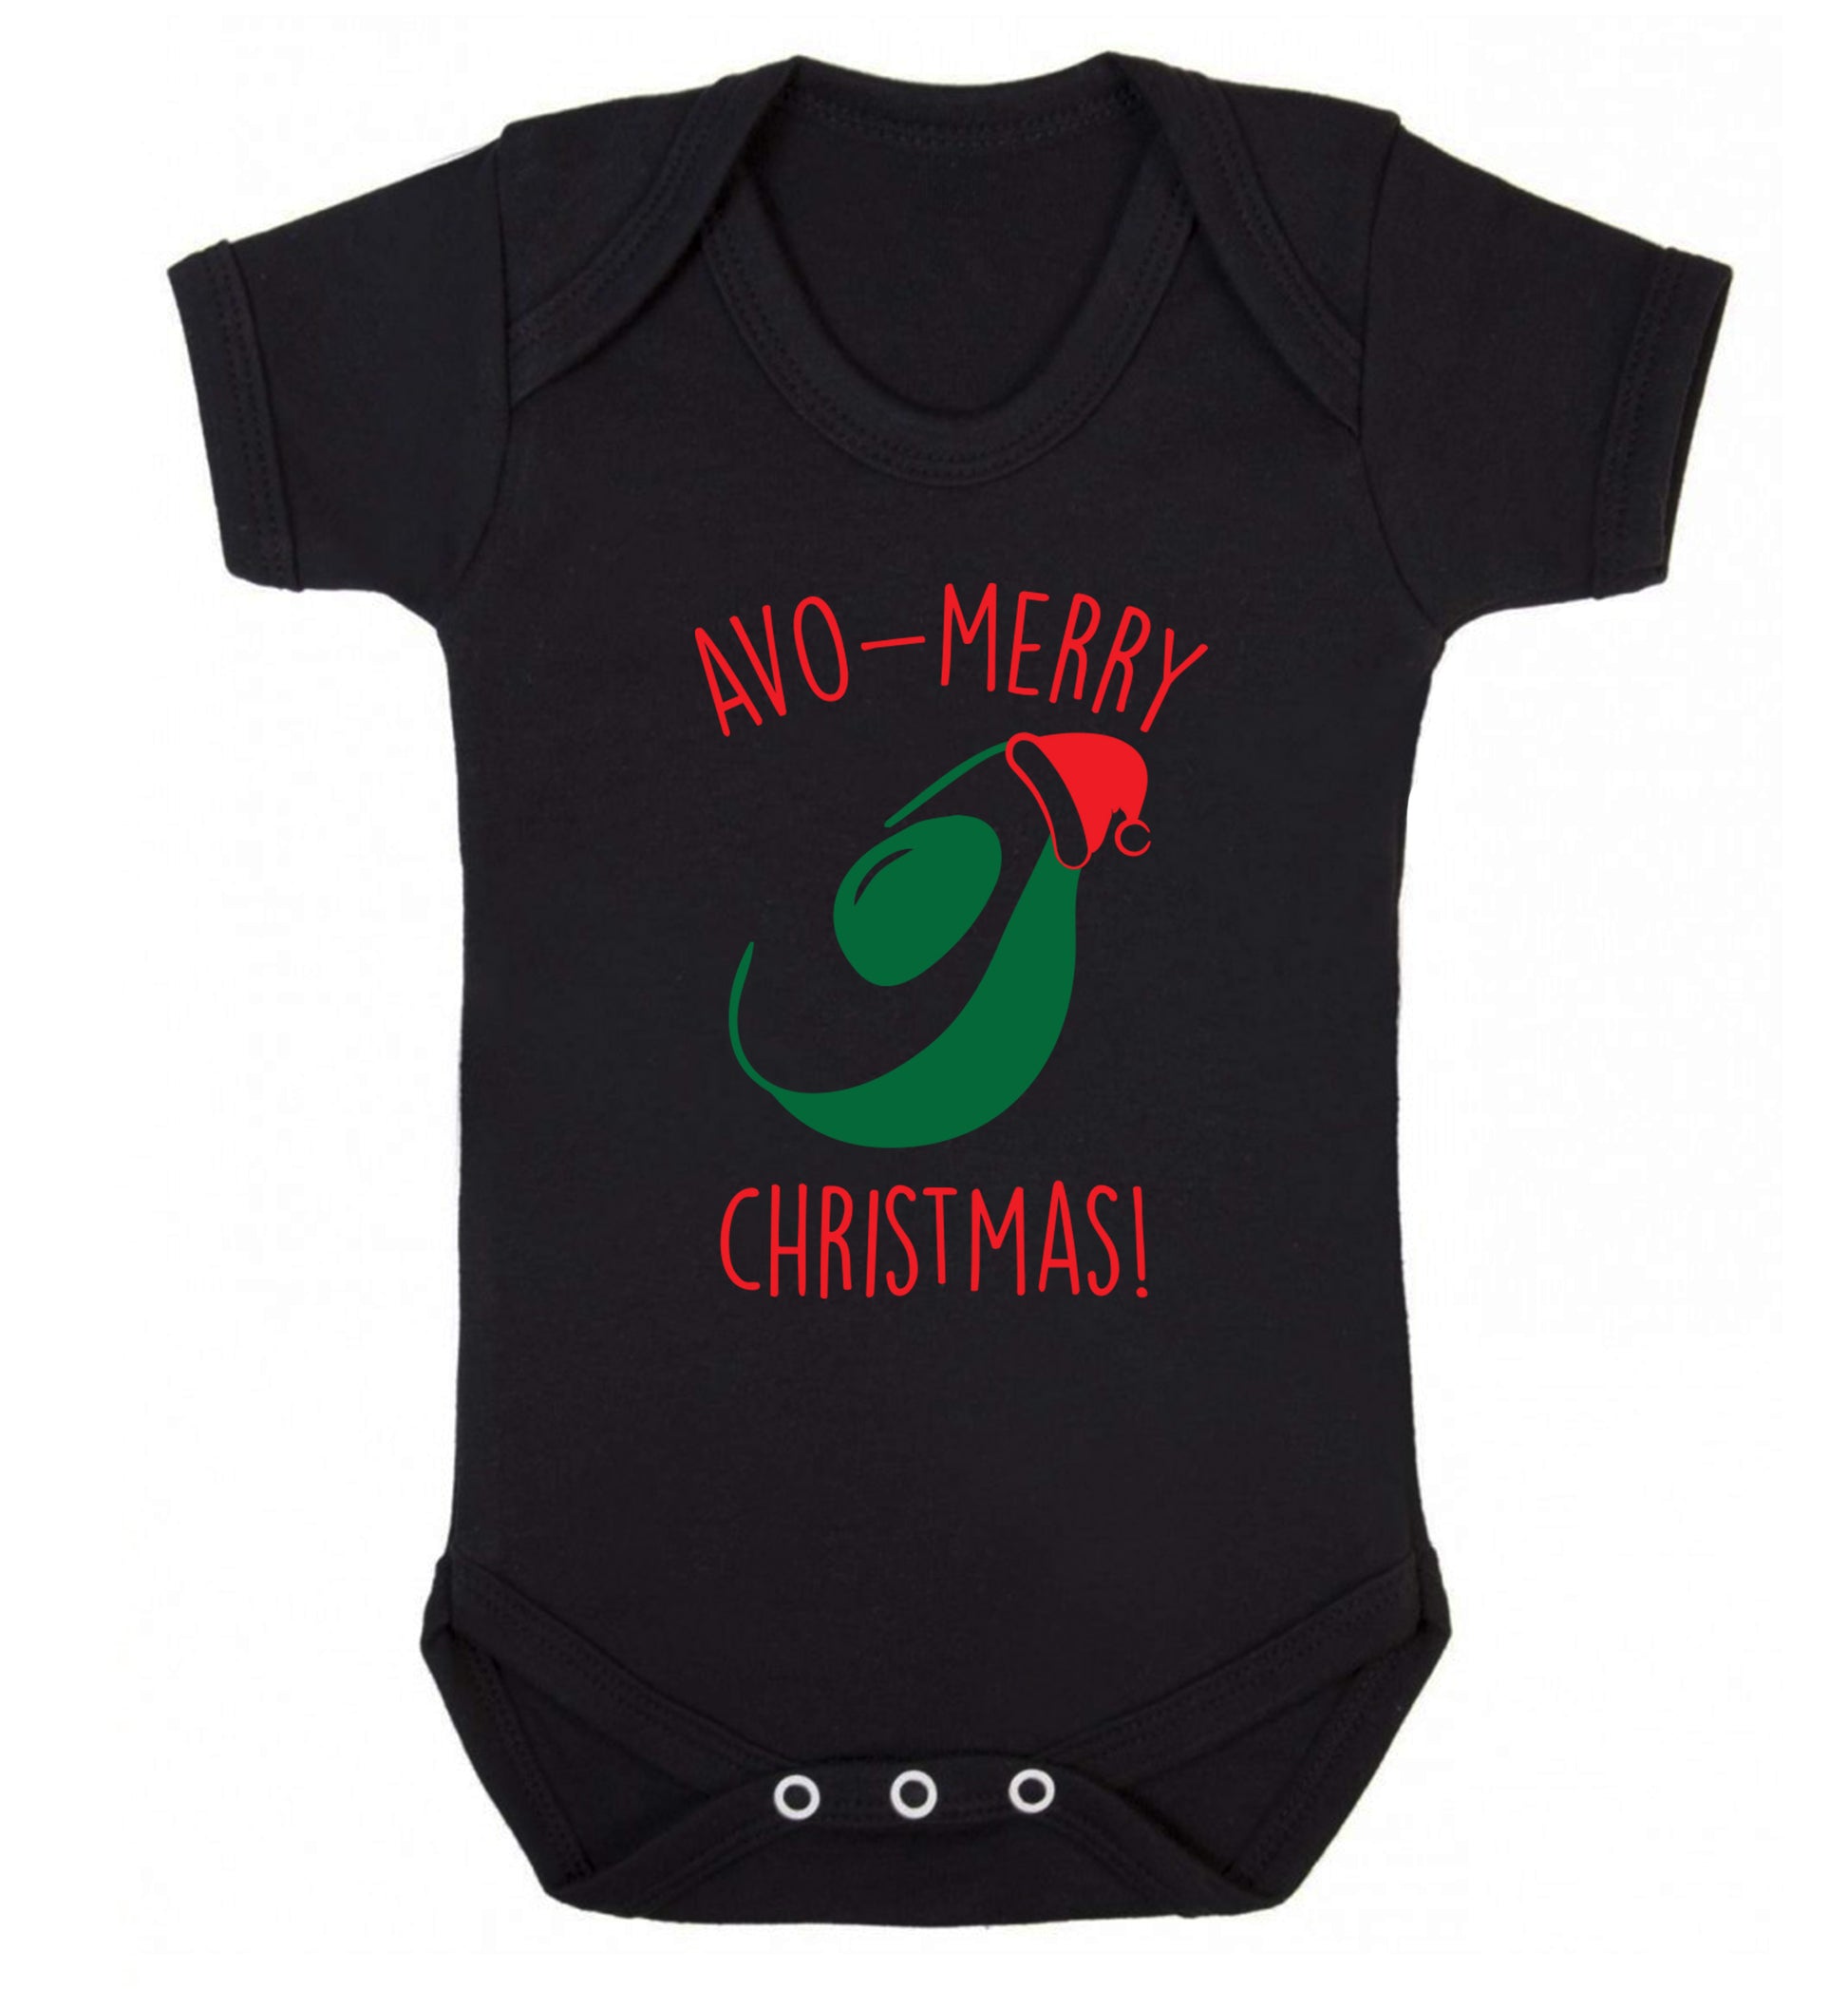 Avo-Merry Christmas Baby Vest black 18-24 months